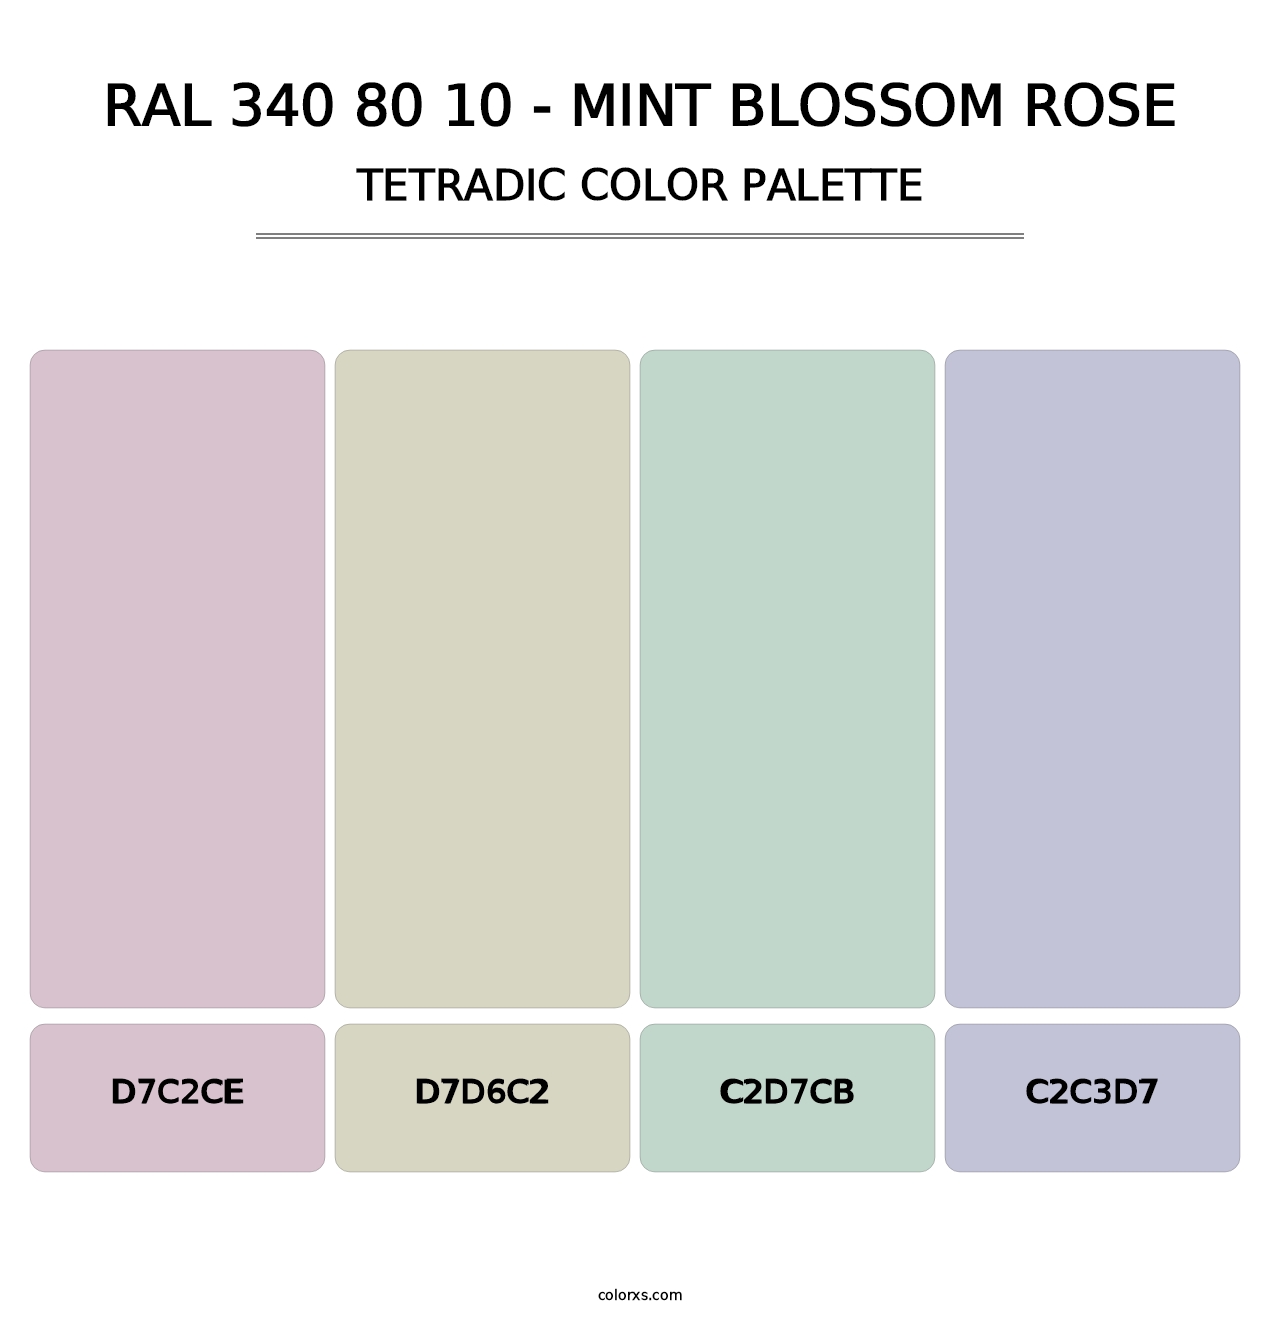 RAL 340 80 10 - Mint Blossom Rose - Tetradic Color Palette